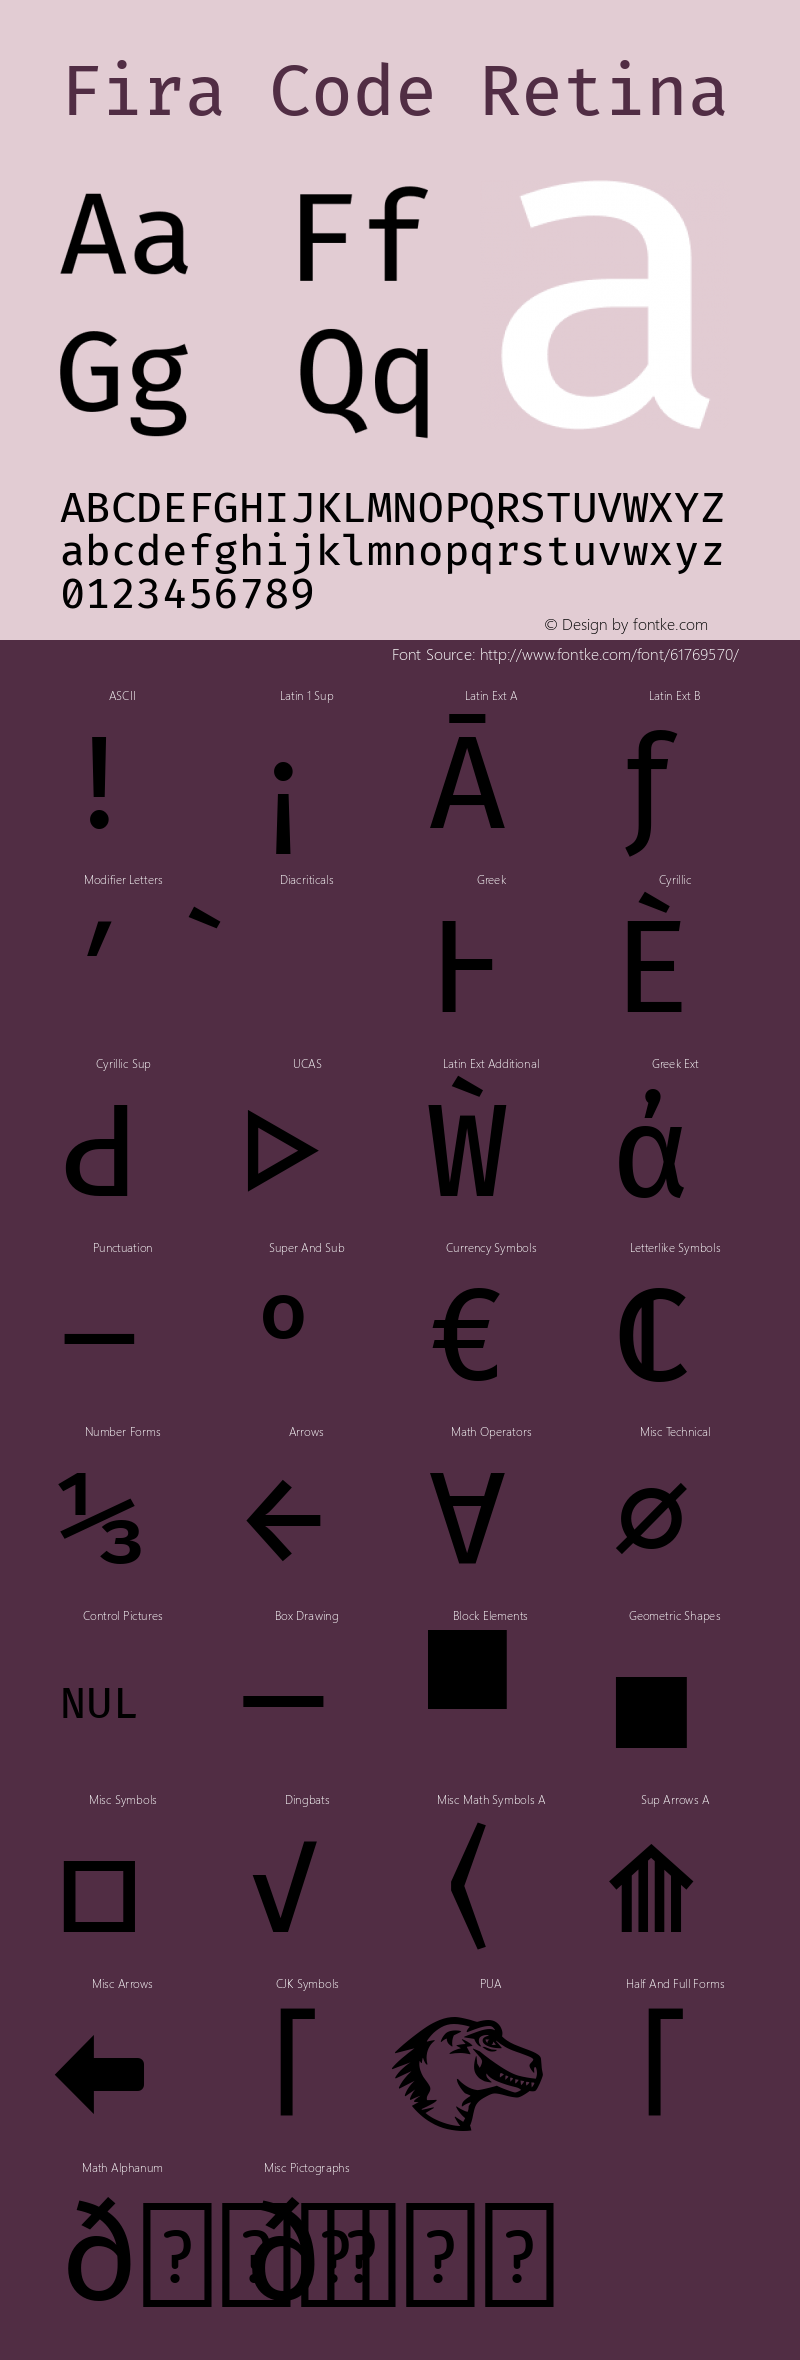 Fira Code Retina Version 3.001 Font Sample